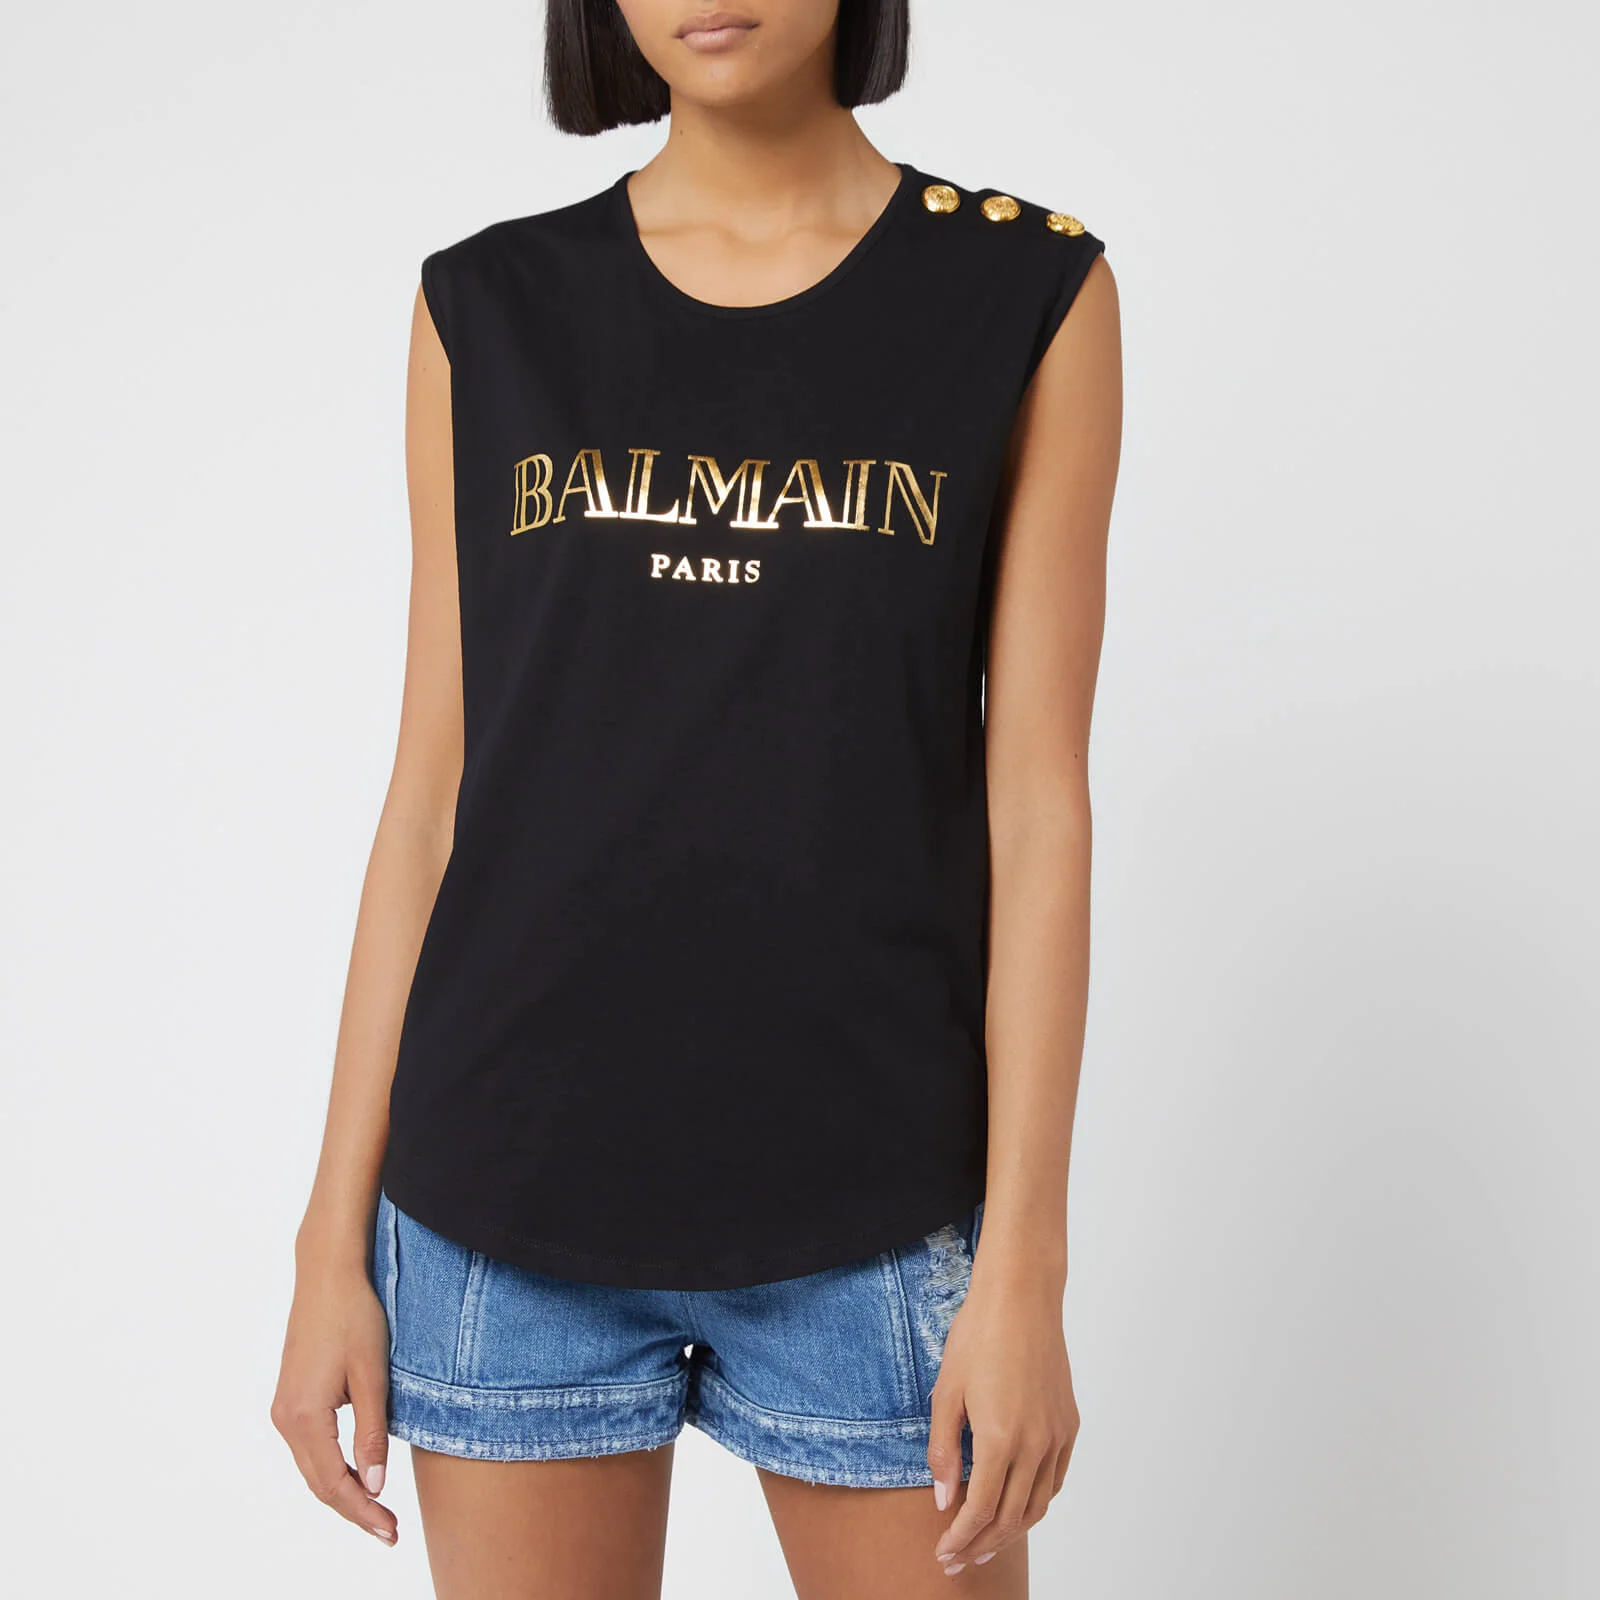 Balmain Women's Logo Tank Top - Black/Gold Image 1